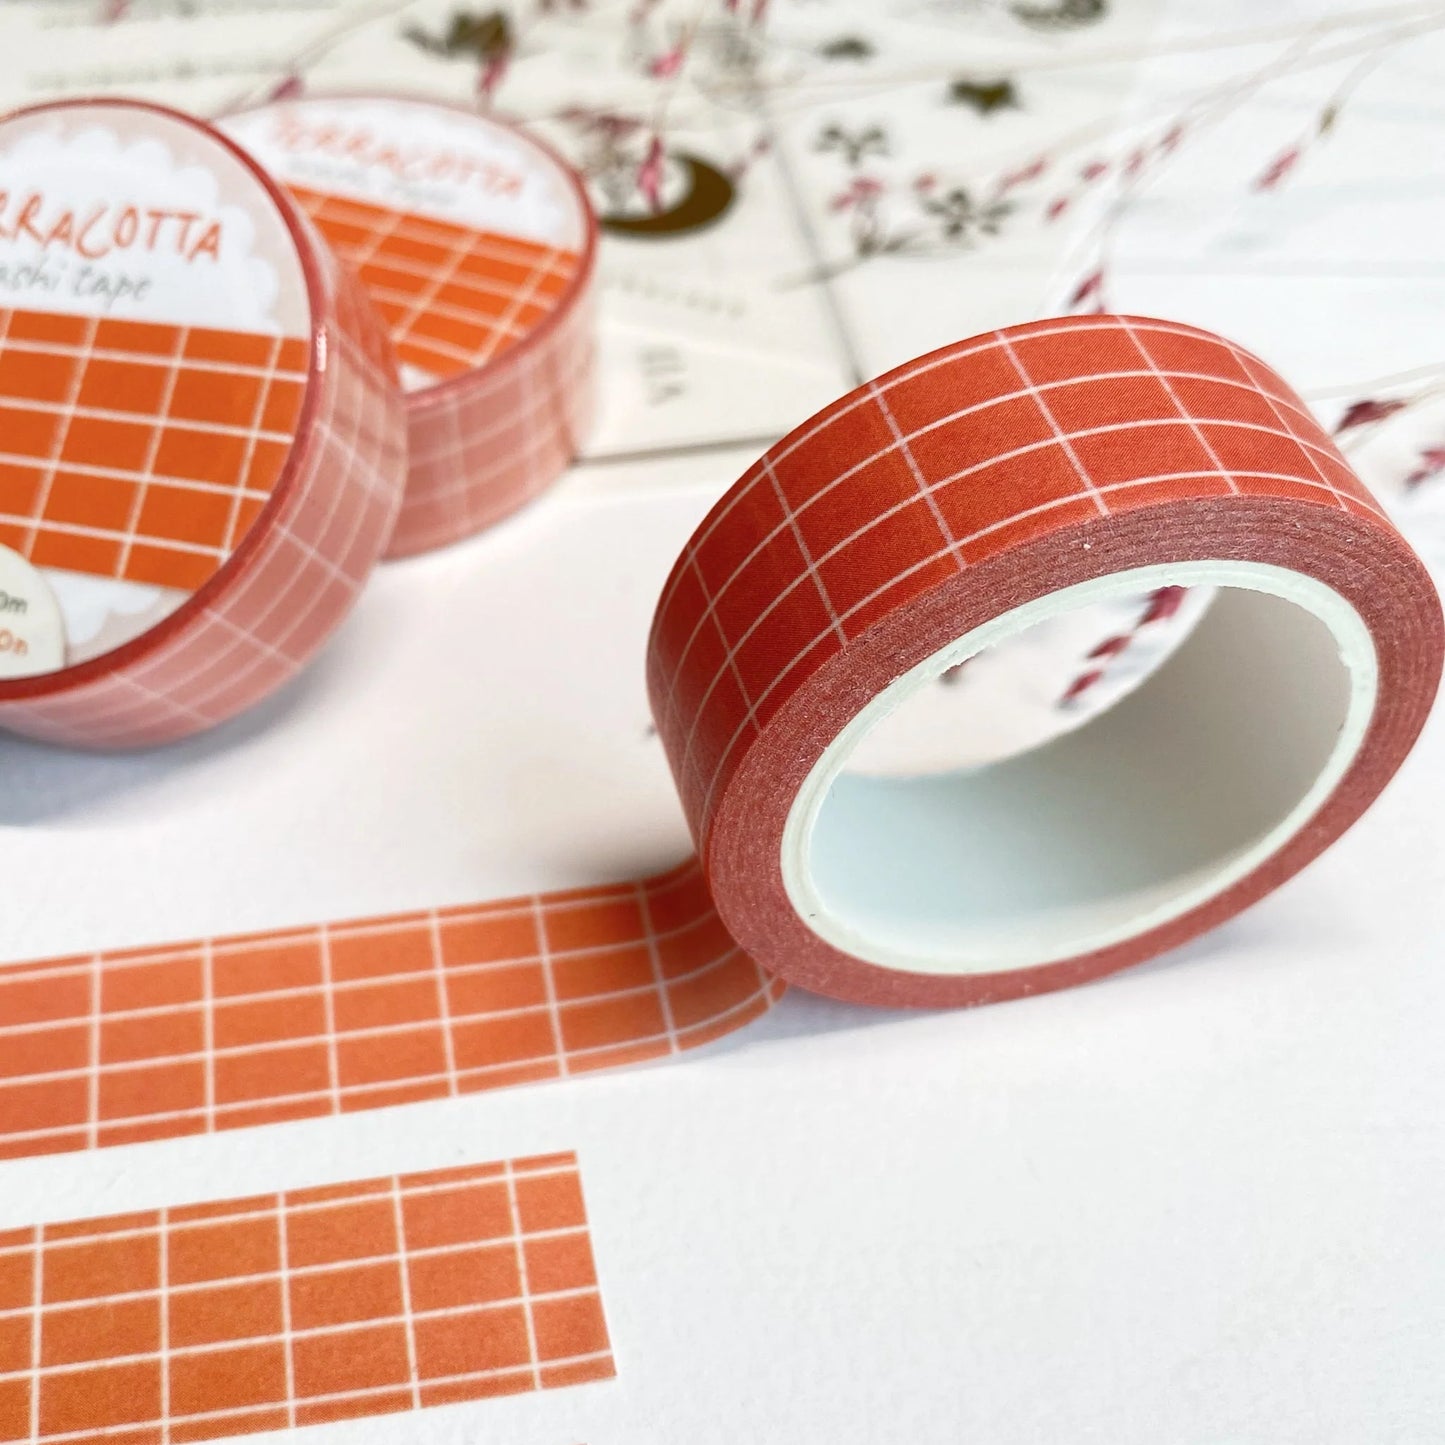 Washi tape Terracotta Grid - LETTOOn